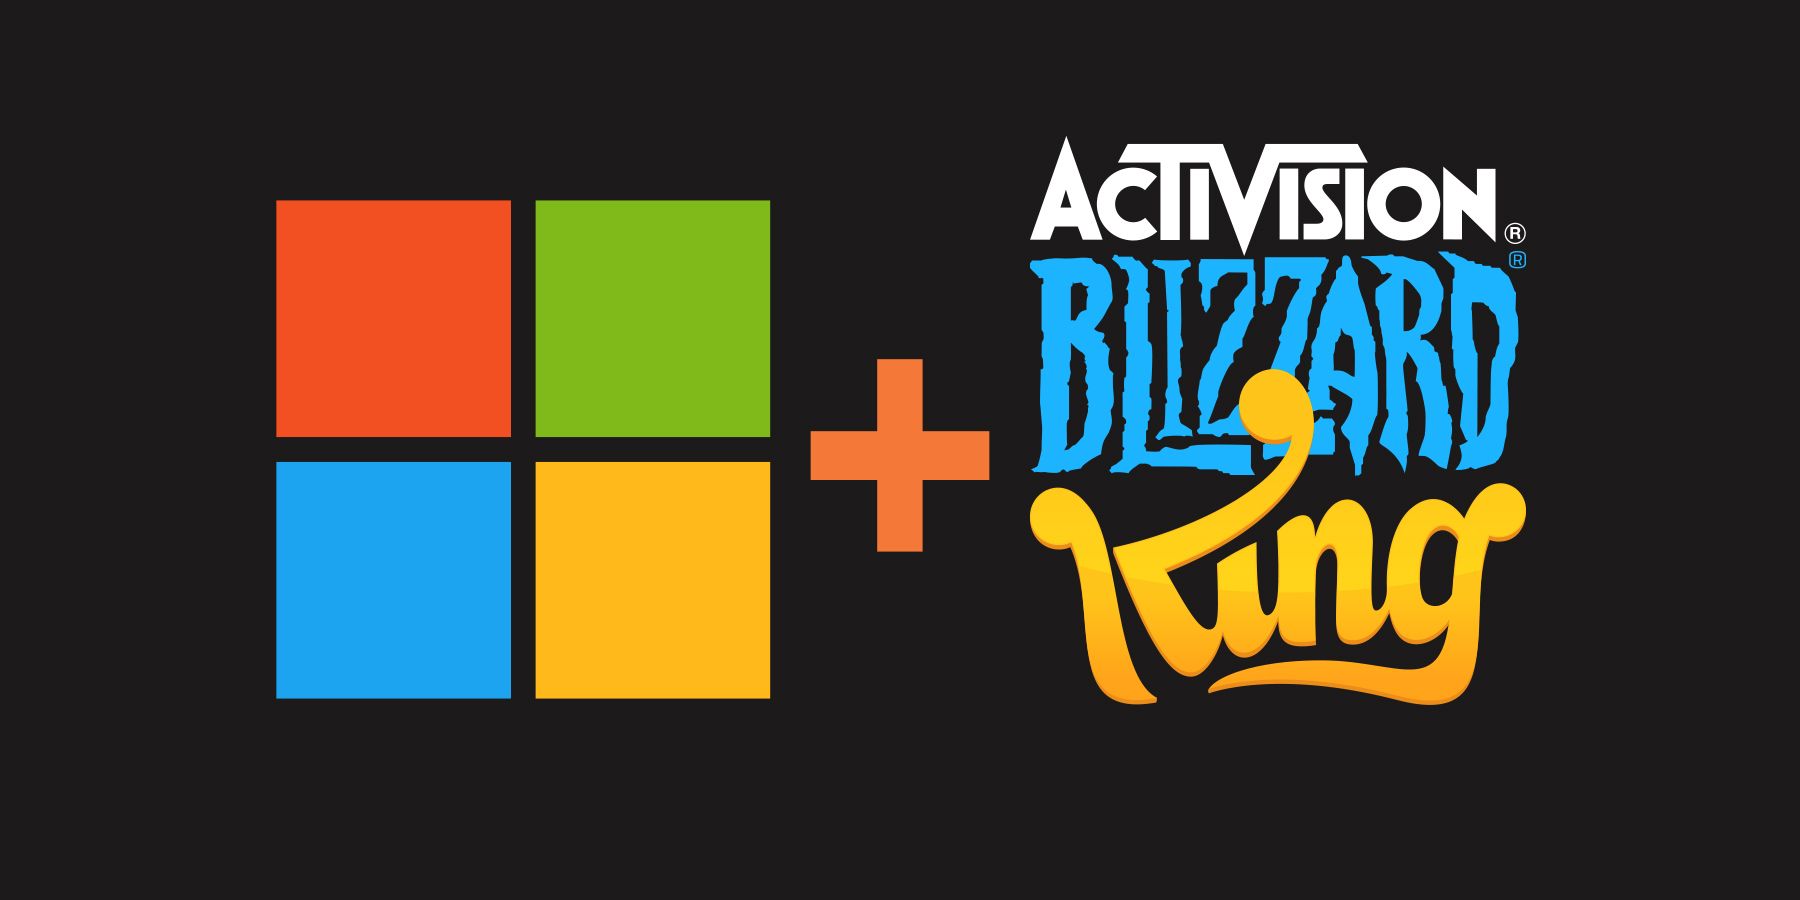 EU approves Microsoft - Activision Blizzard deal, CMA unimpressed